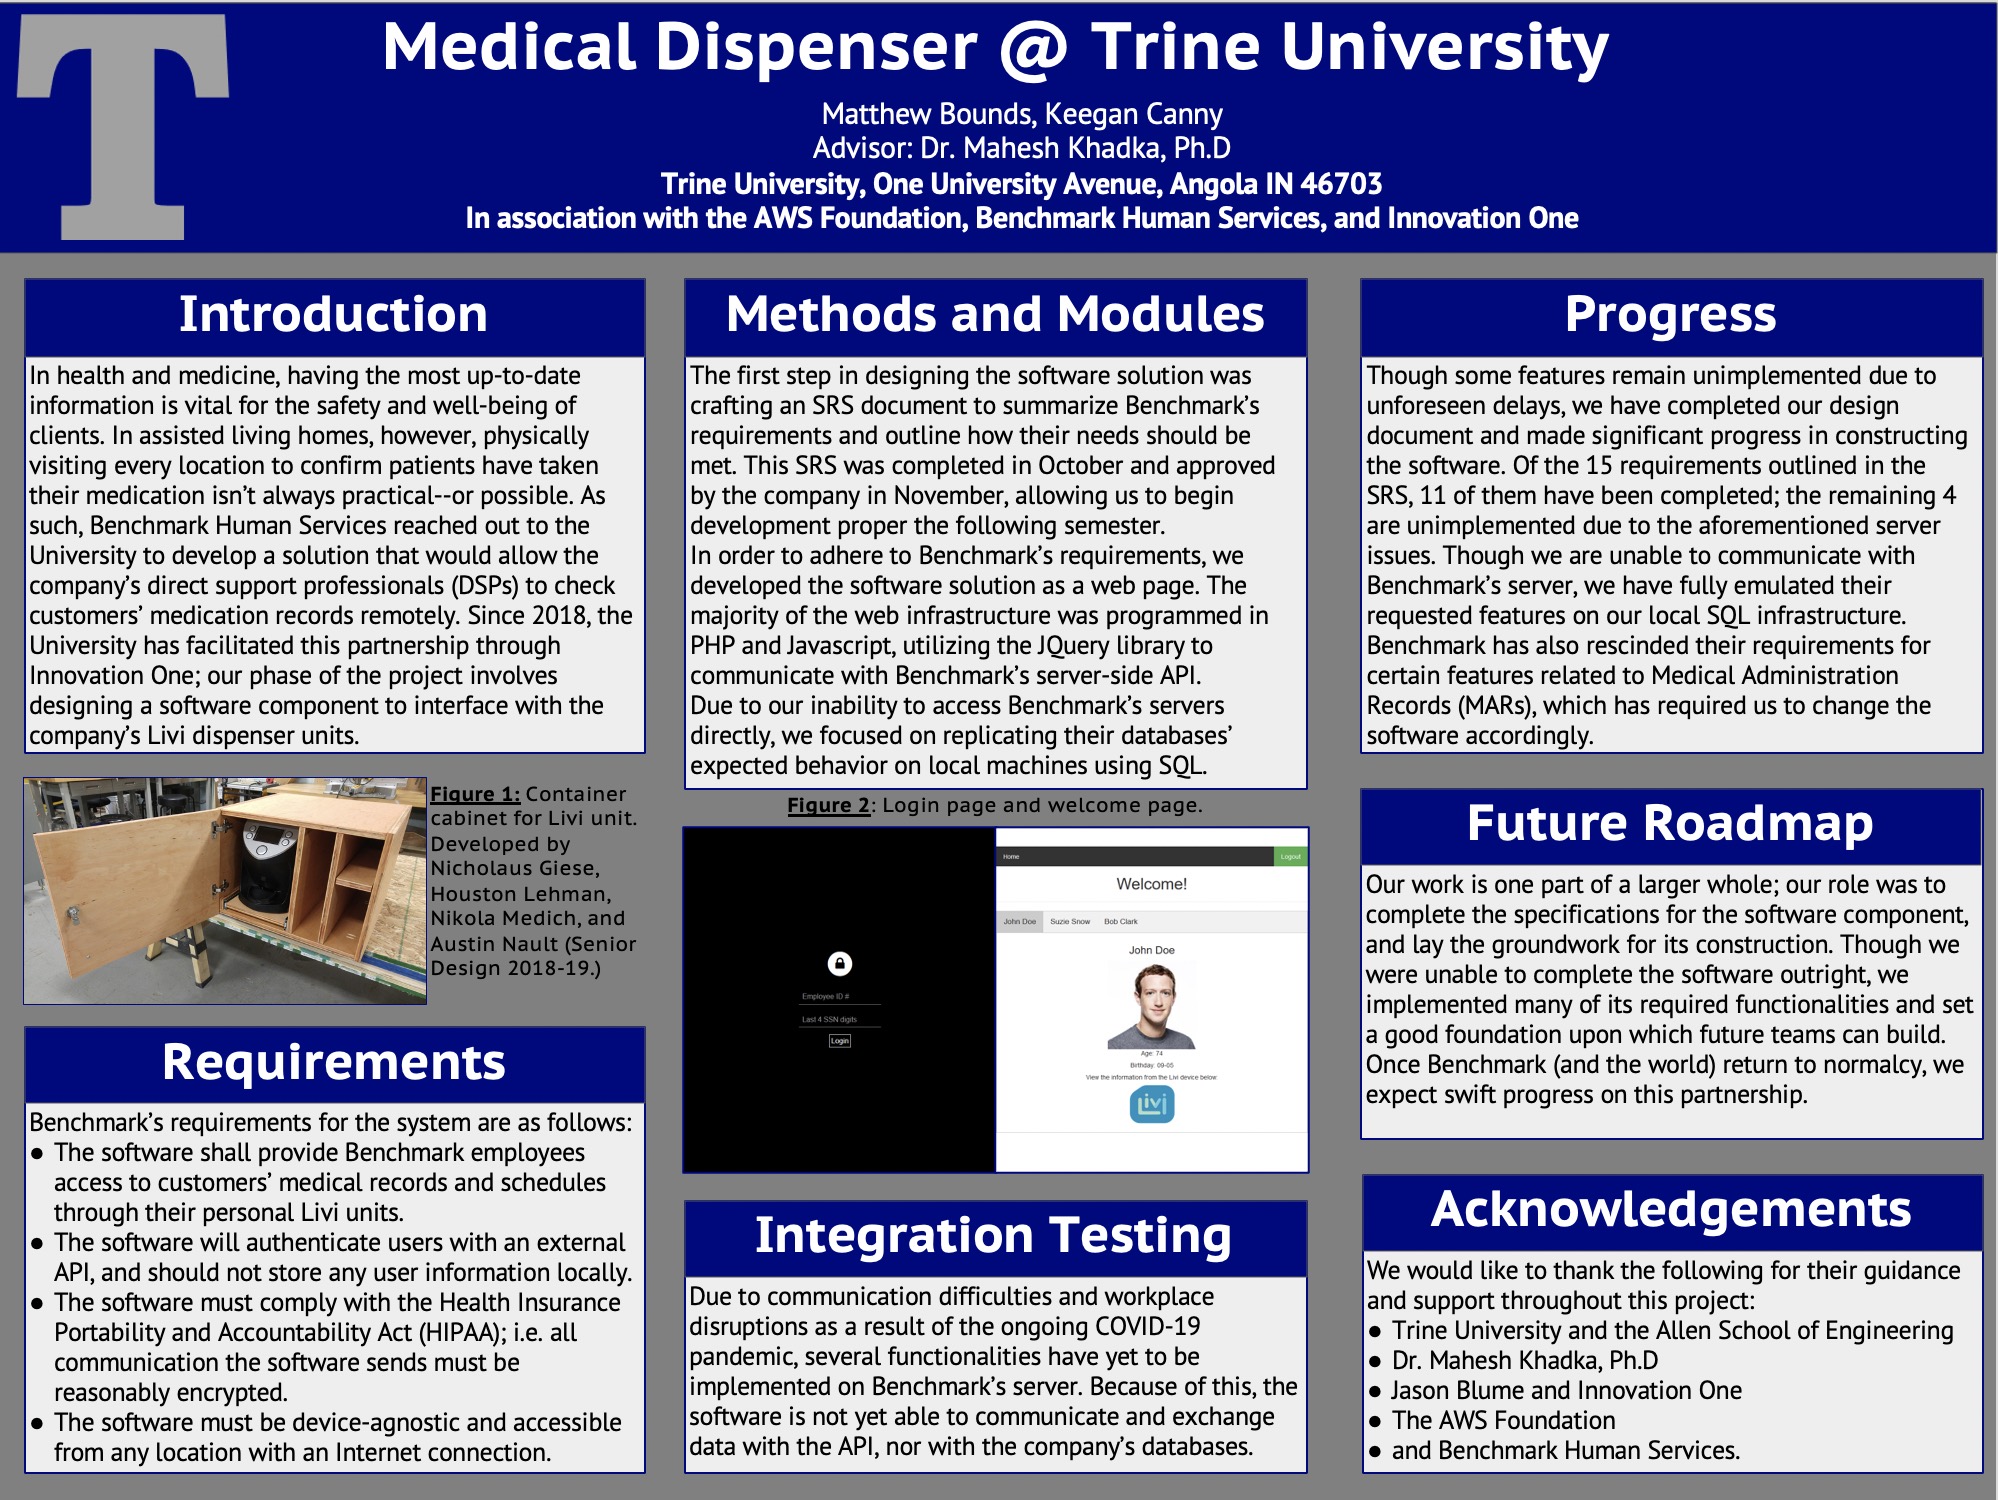 Medical Dispenser Poster